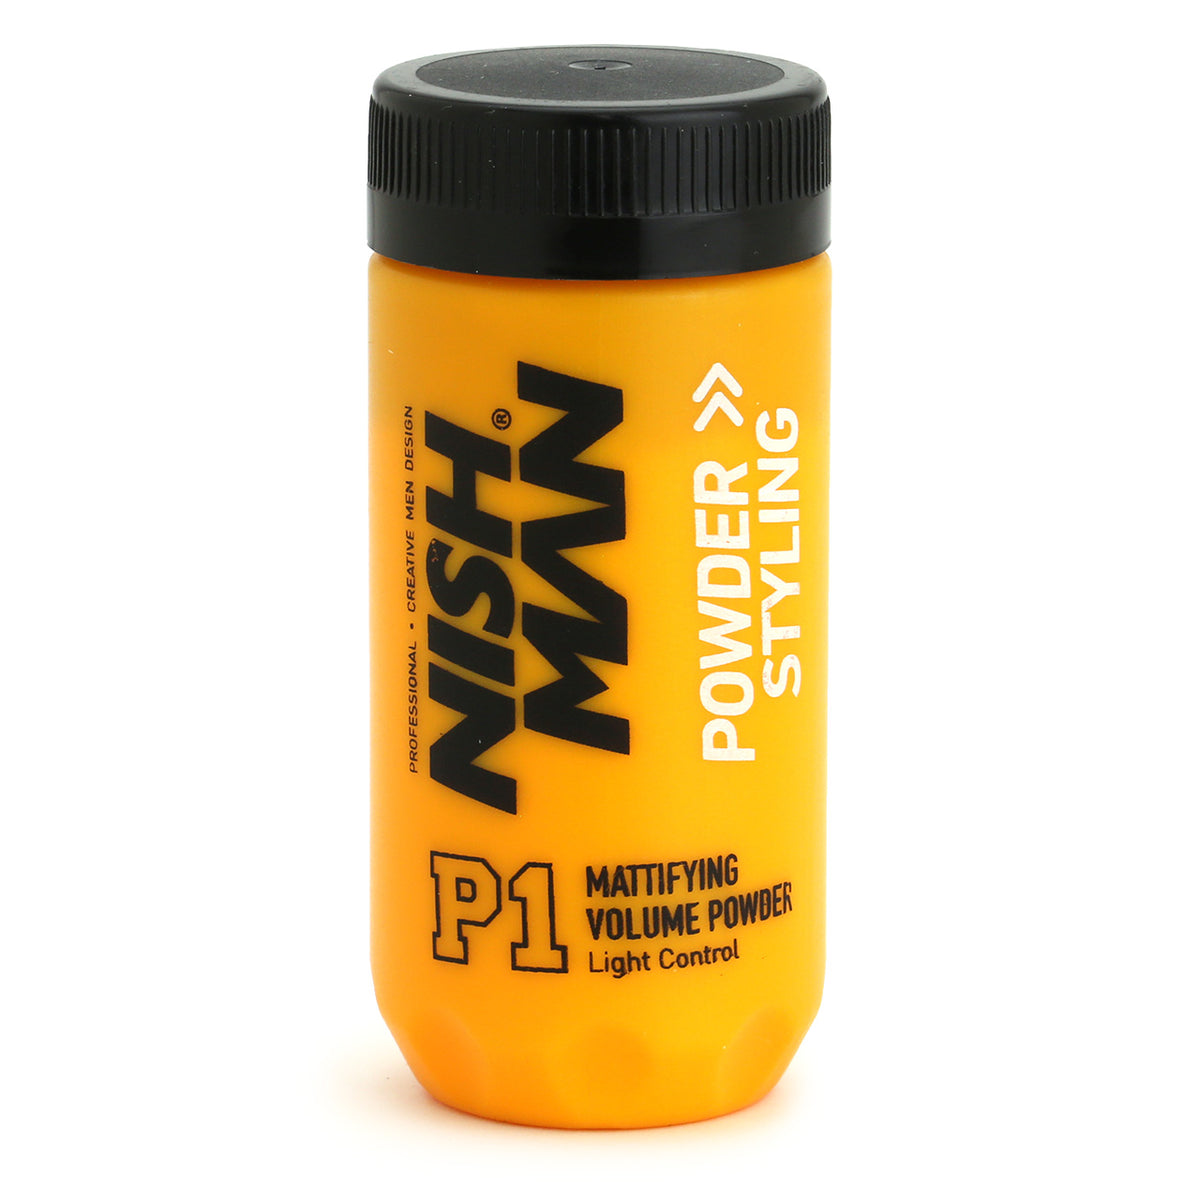 NishMan Mattifying Volume Powder in yellow dispenser pack